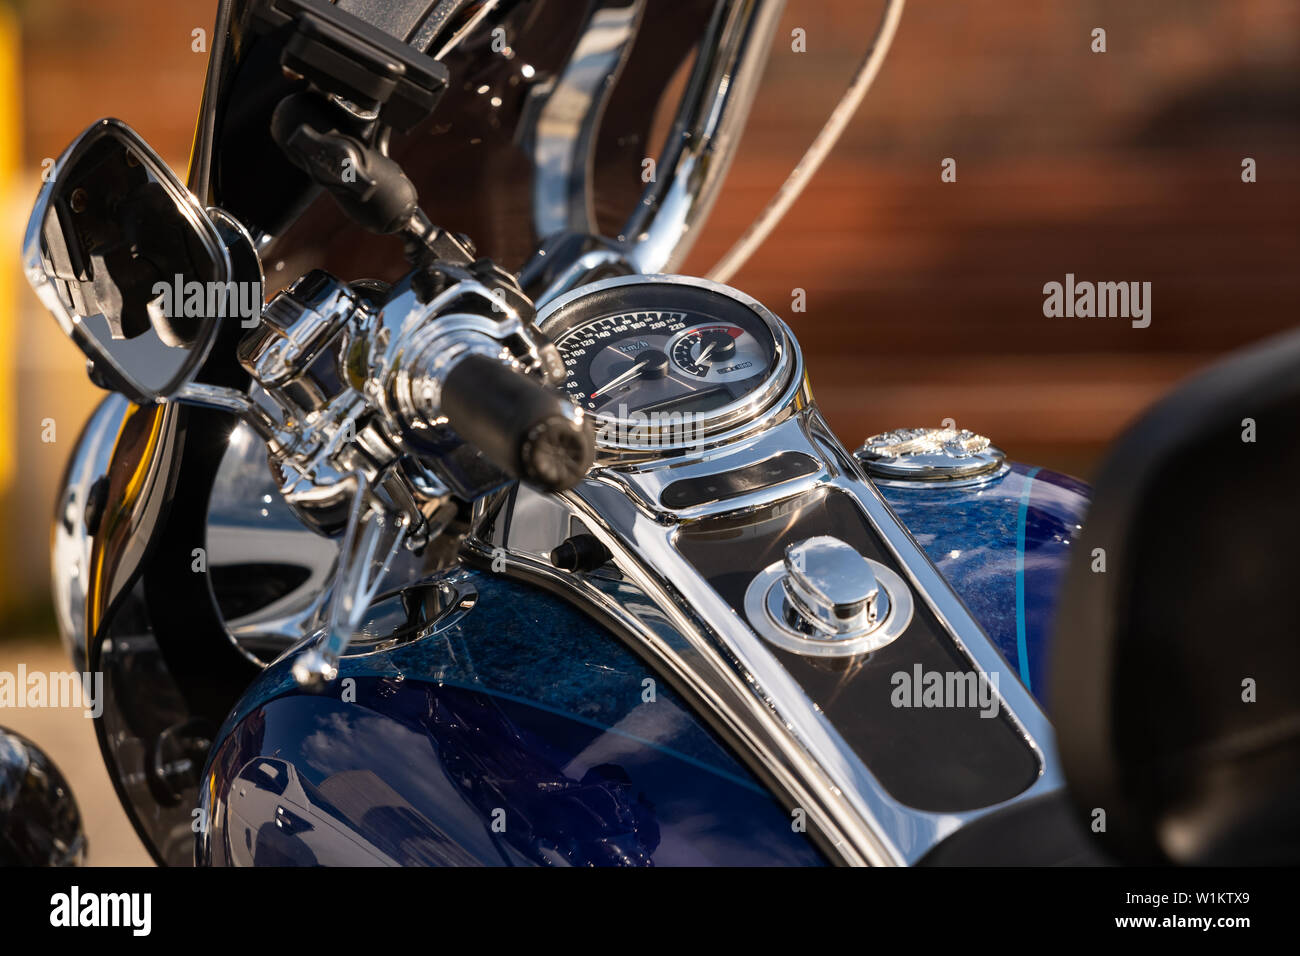 Description: dashboard blue motorcycle close-up Stock Photo